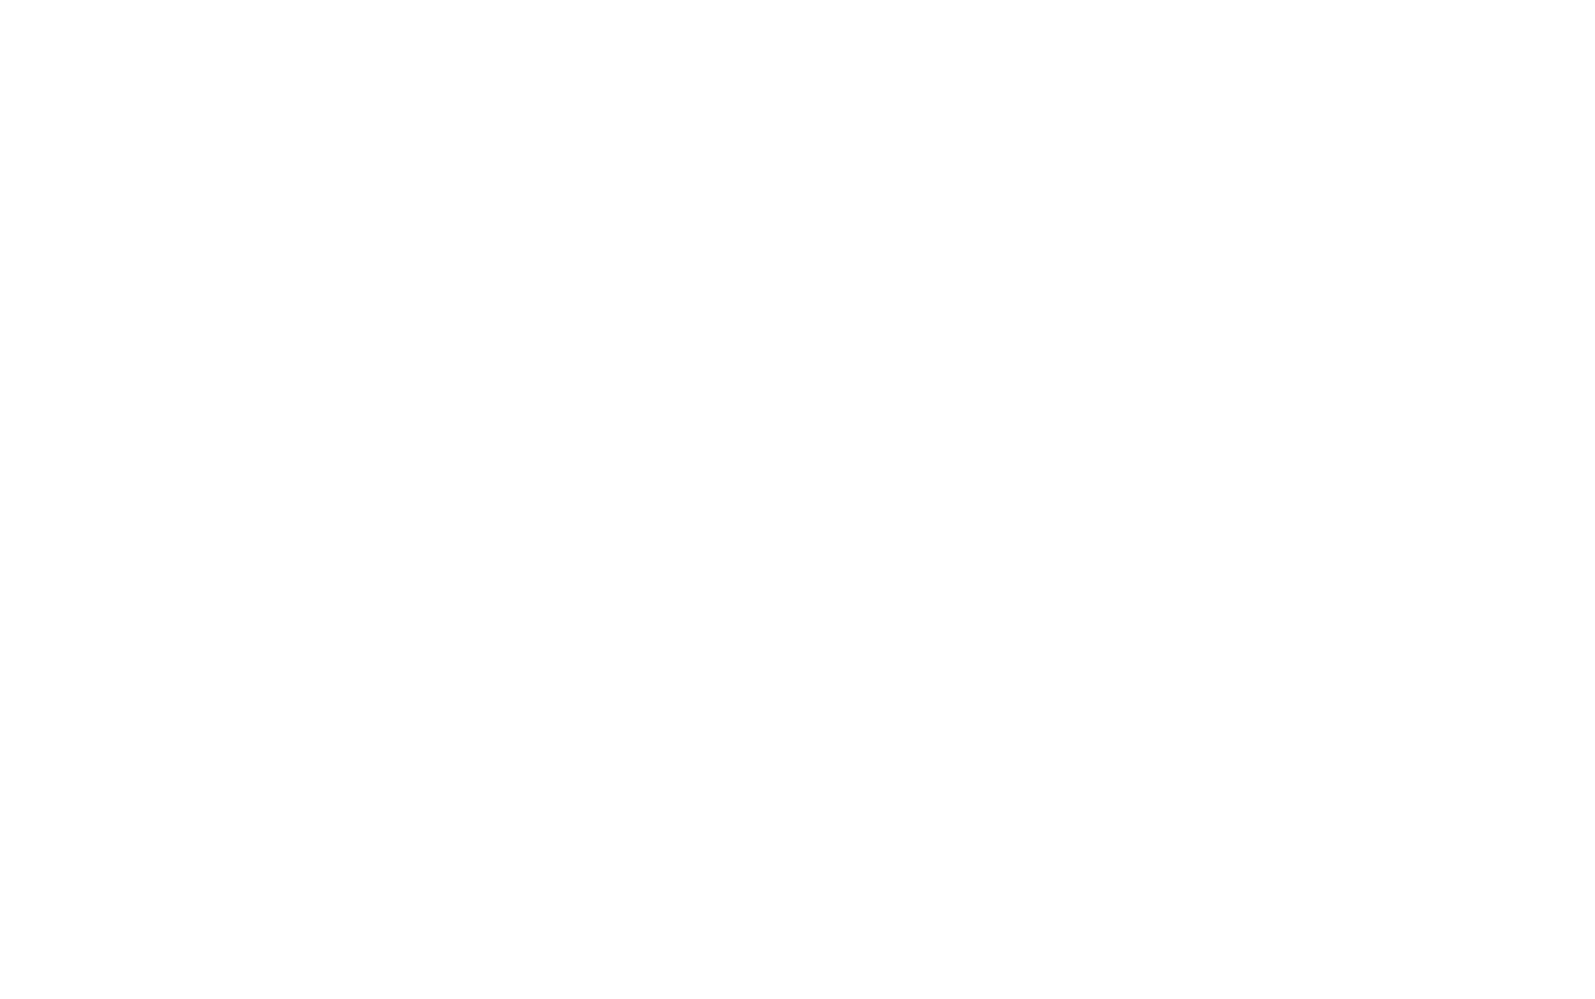 Zurich Insurance Group logo large for dark backgrounds (transparent PNG)